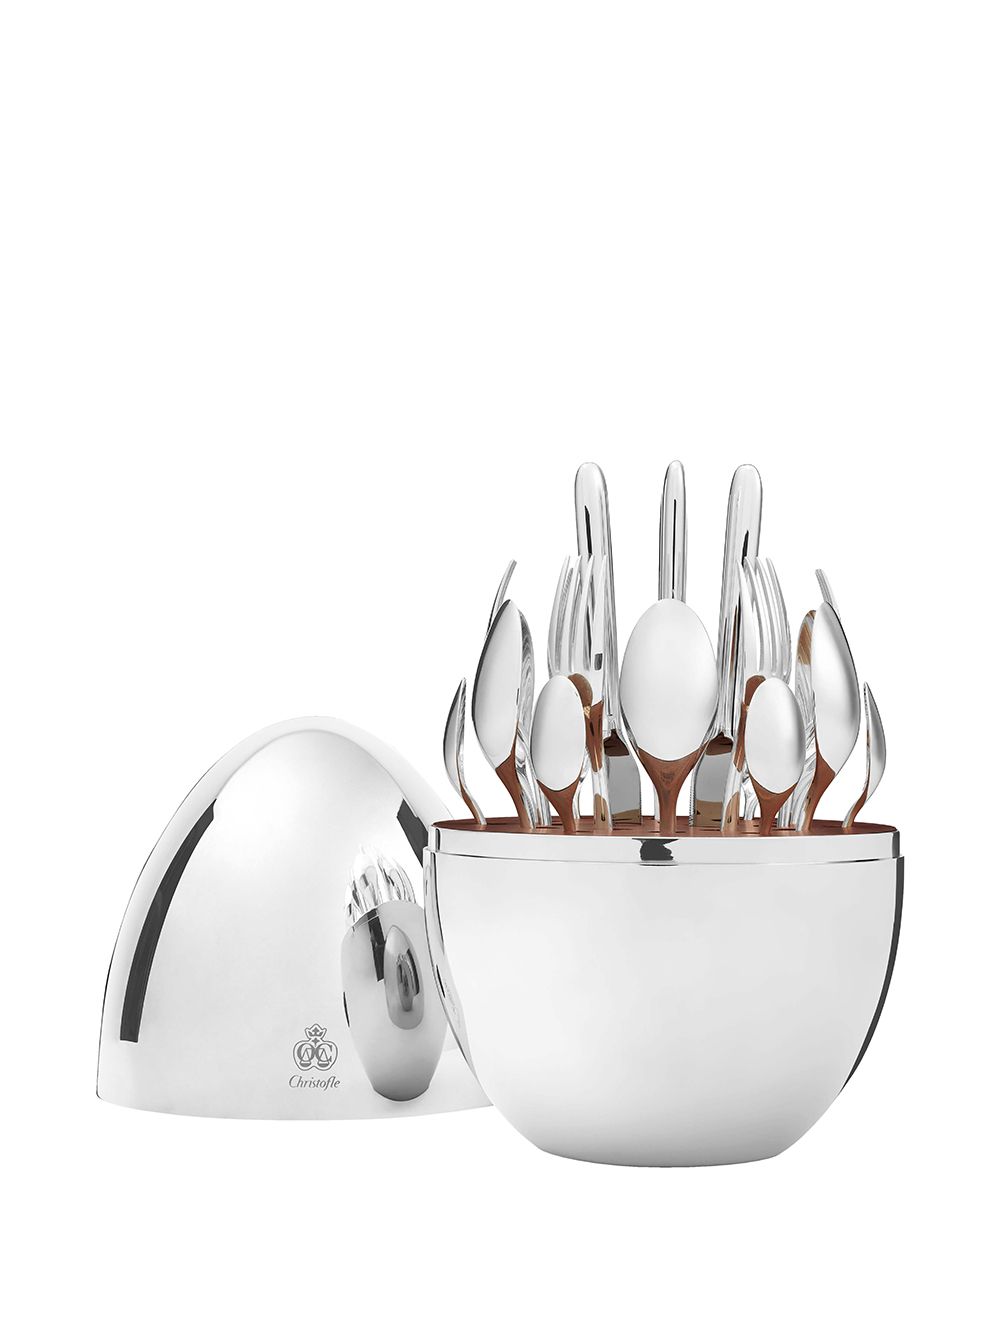 Christofle Mood silver-plated flatware set (6-person setting) von Christofle